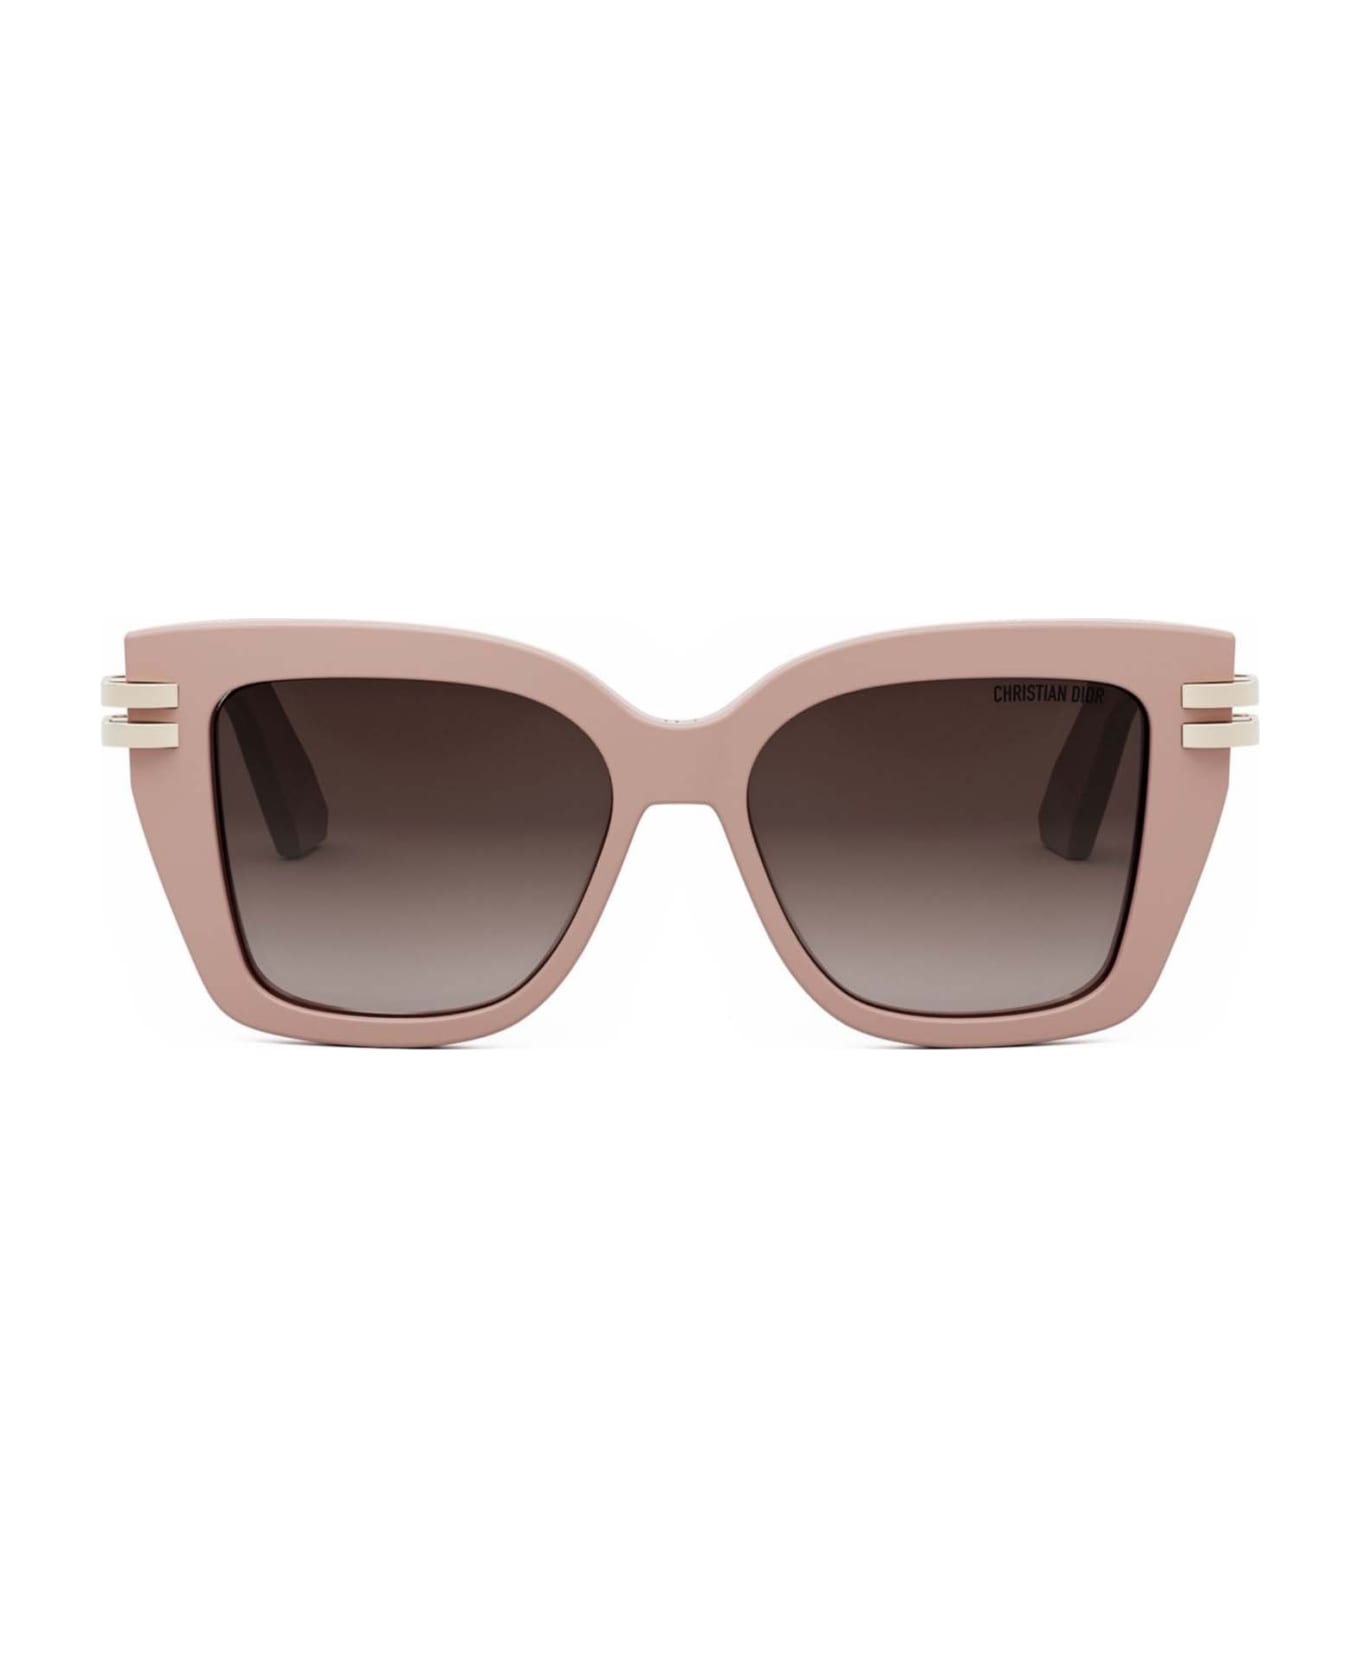 Dior Eyewear Sunglasses - Rosa/Marrone sfumato サングラス